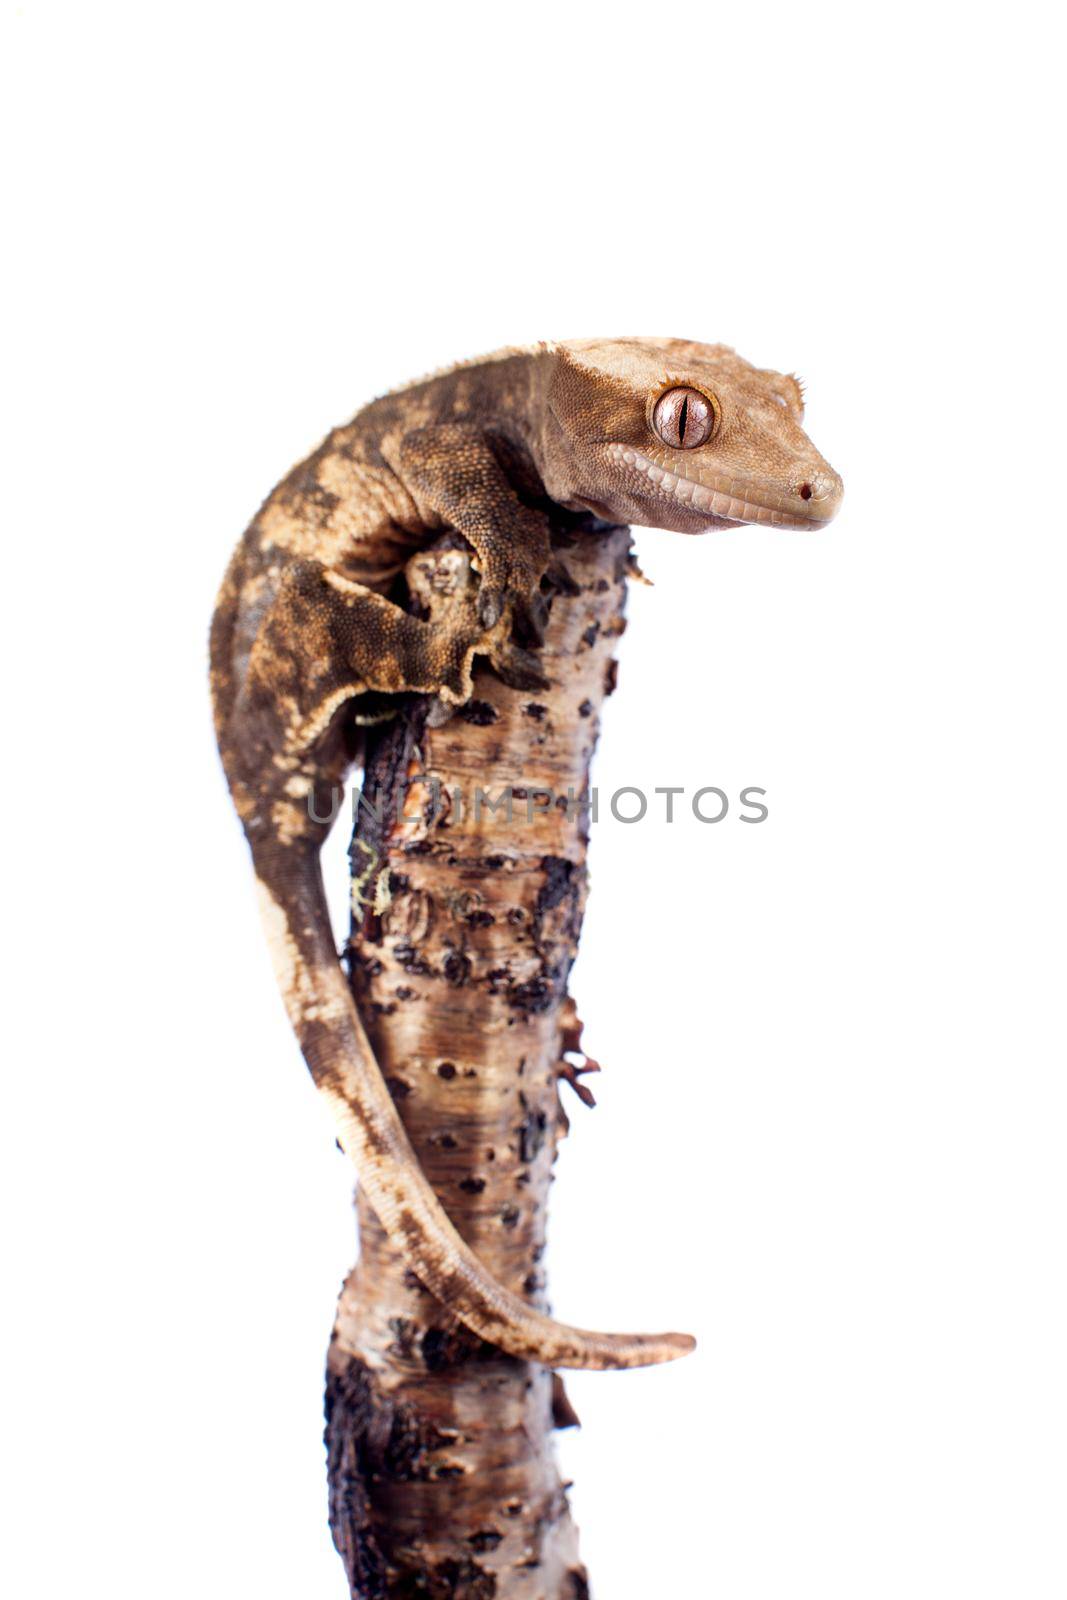 New Caledonian crested gecko, Rhacodactylus ciliatus, isolated on white